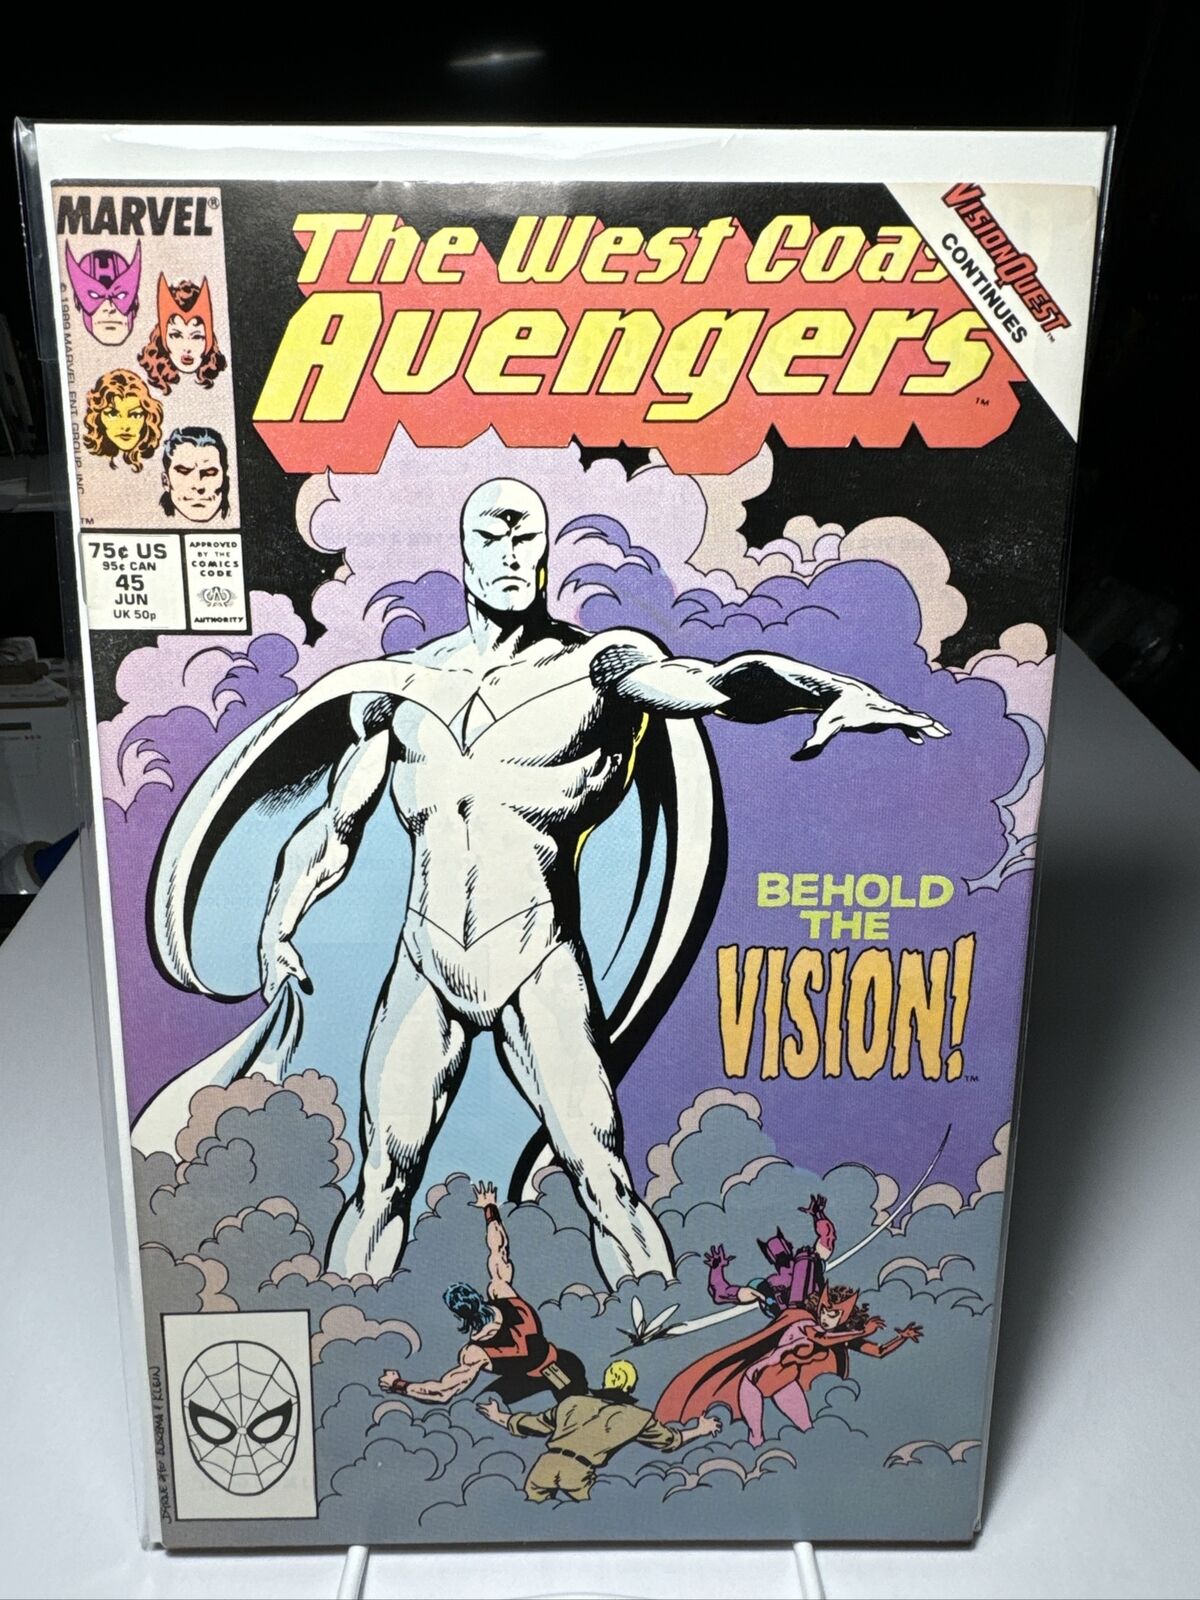 WEST COAST AVENGERS #45 - 1ST  APP. WHITE VISION MARVEL COMICS 1989